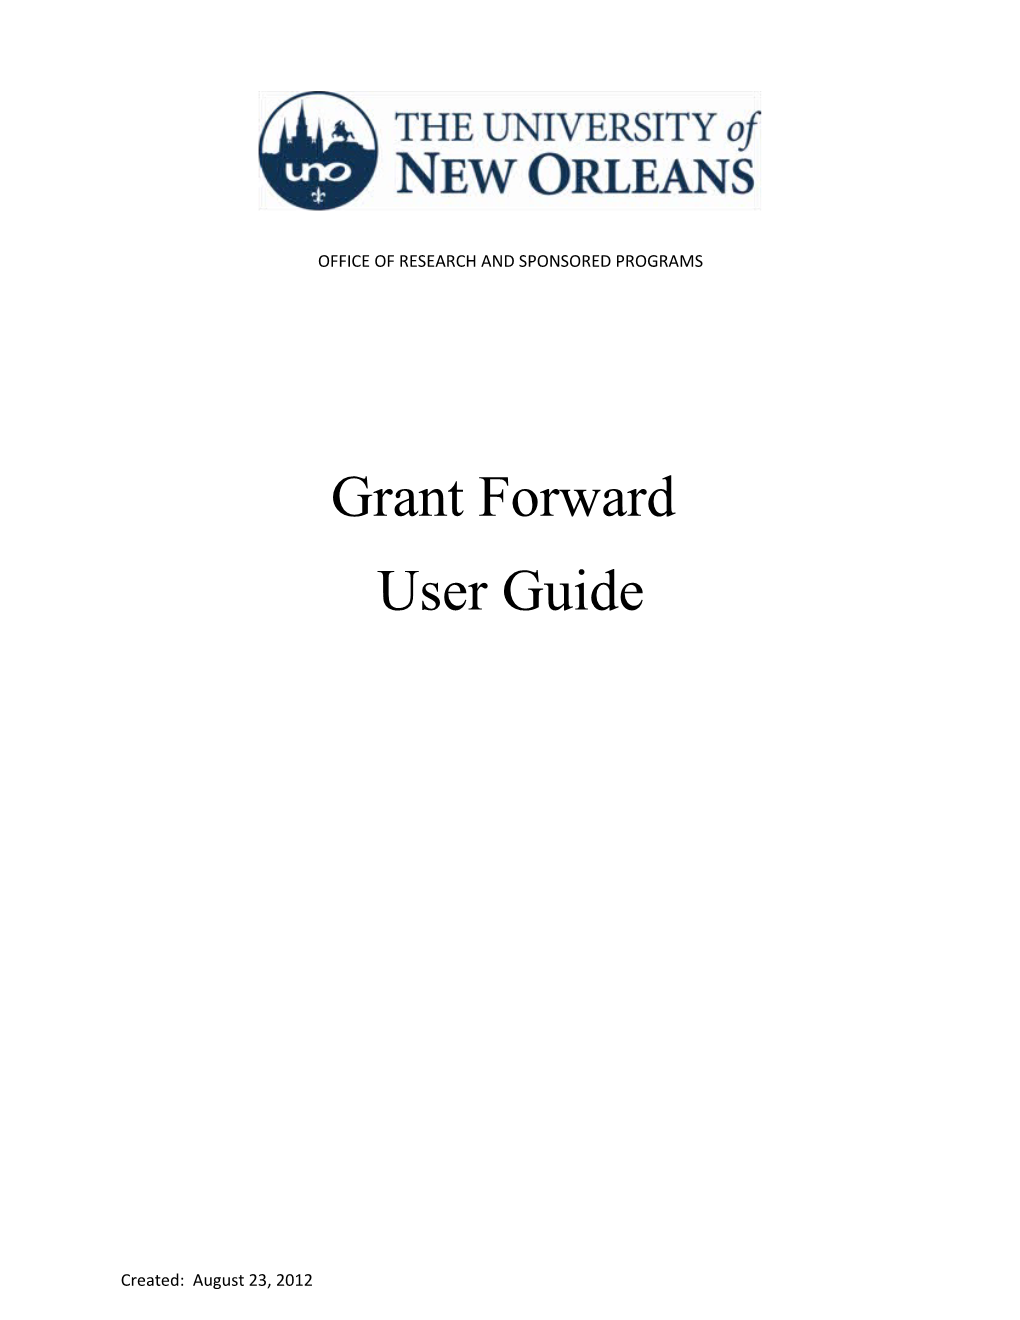 Grant Forward User Guide